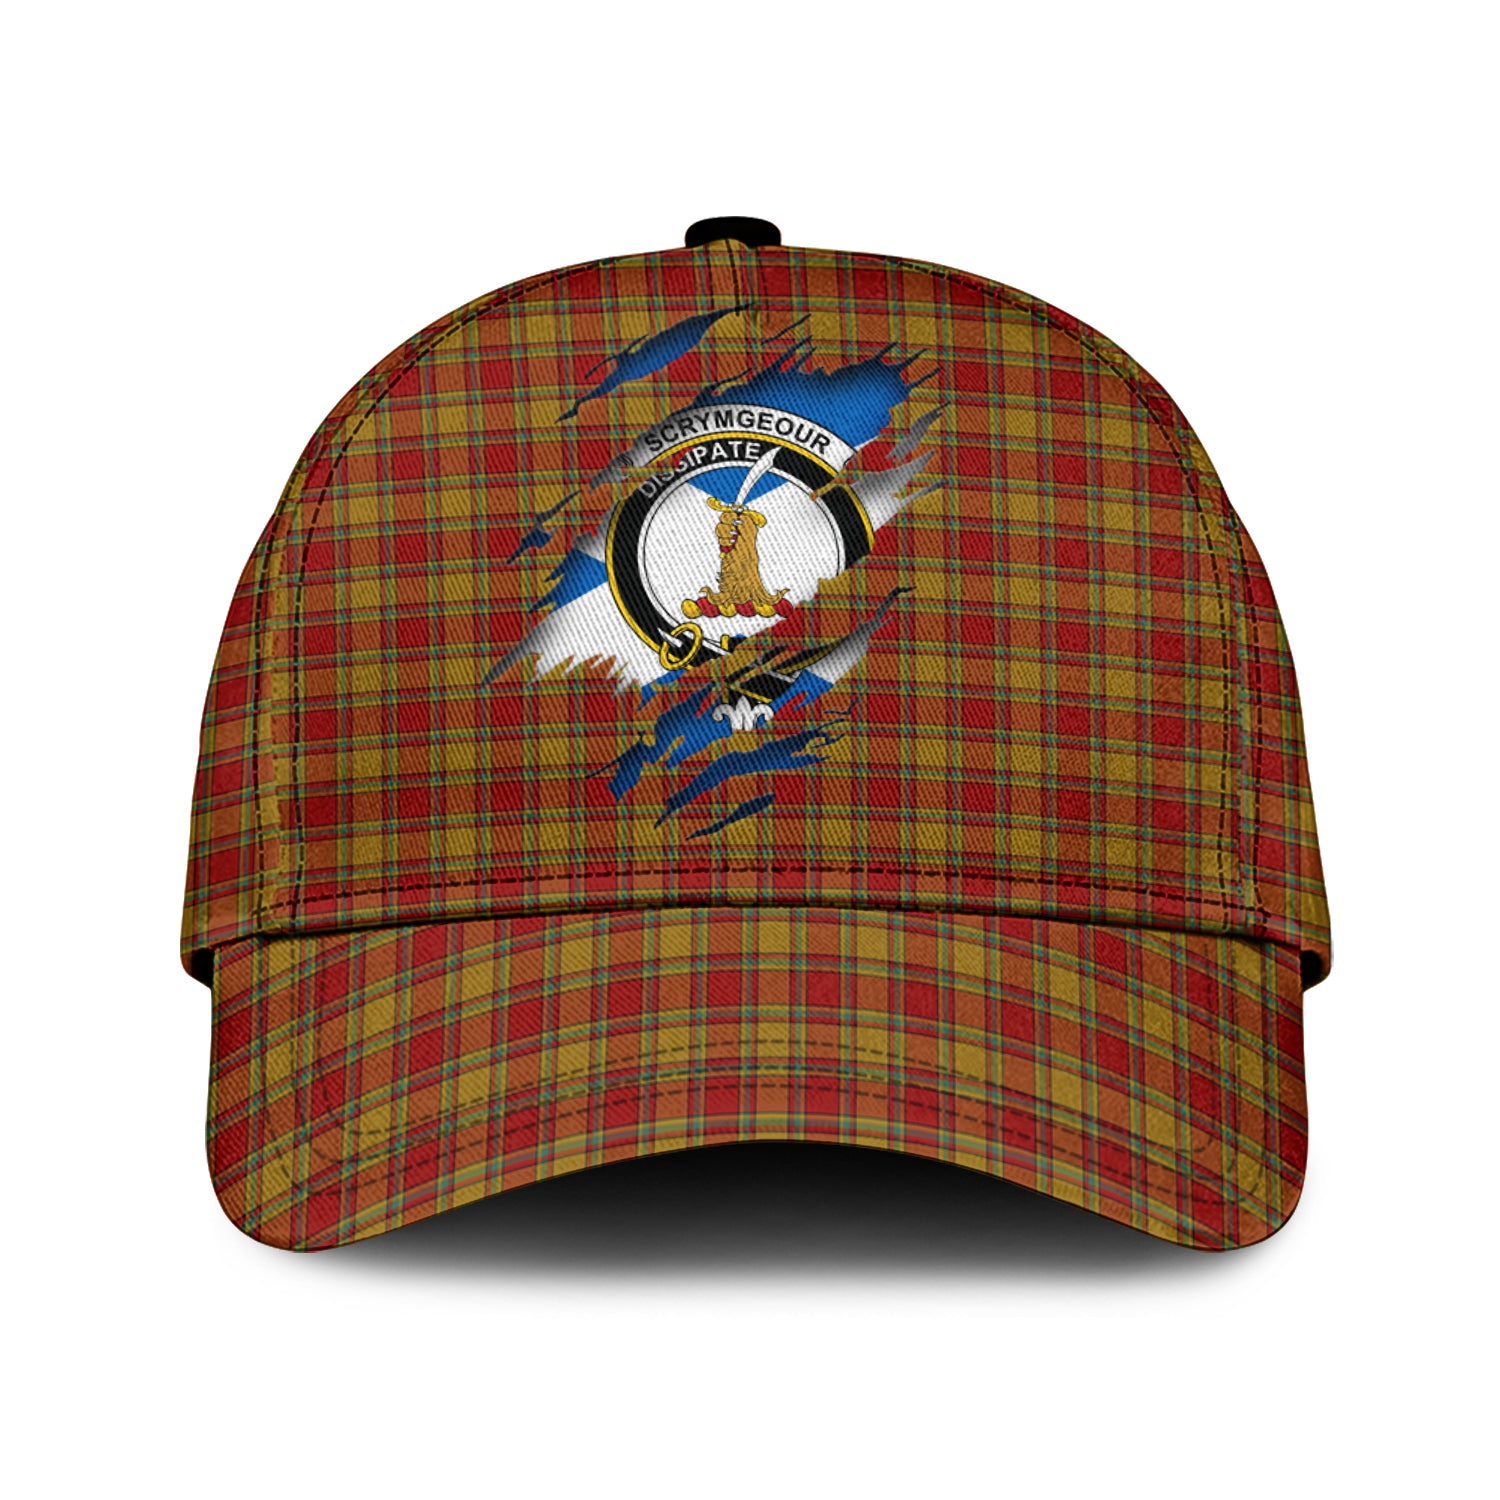 scrymgeour-tartan-plaid-cap-family-crest-in-me-style-tartan-baseball-cap